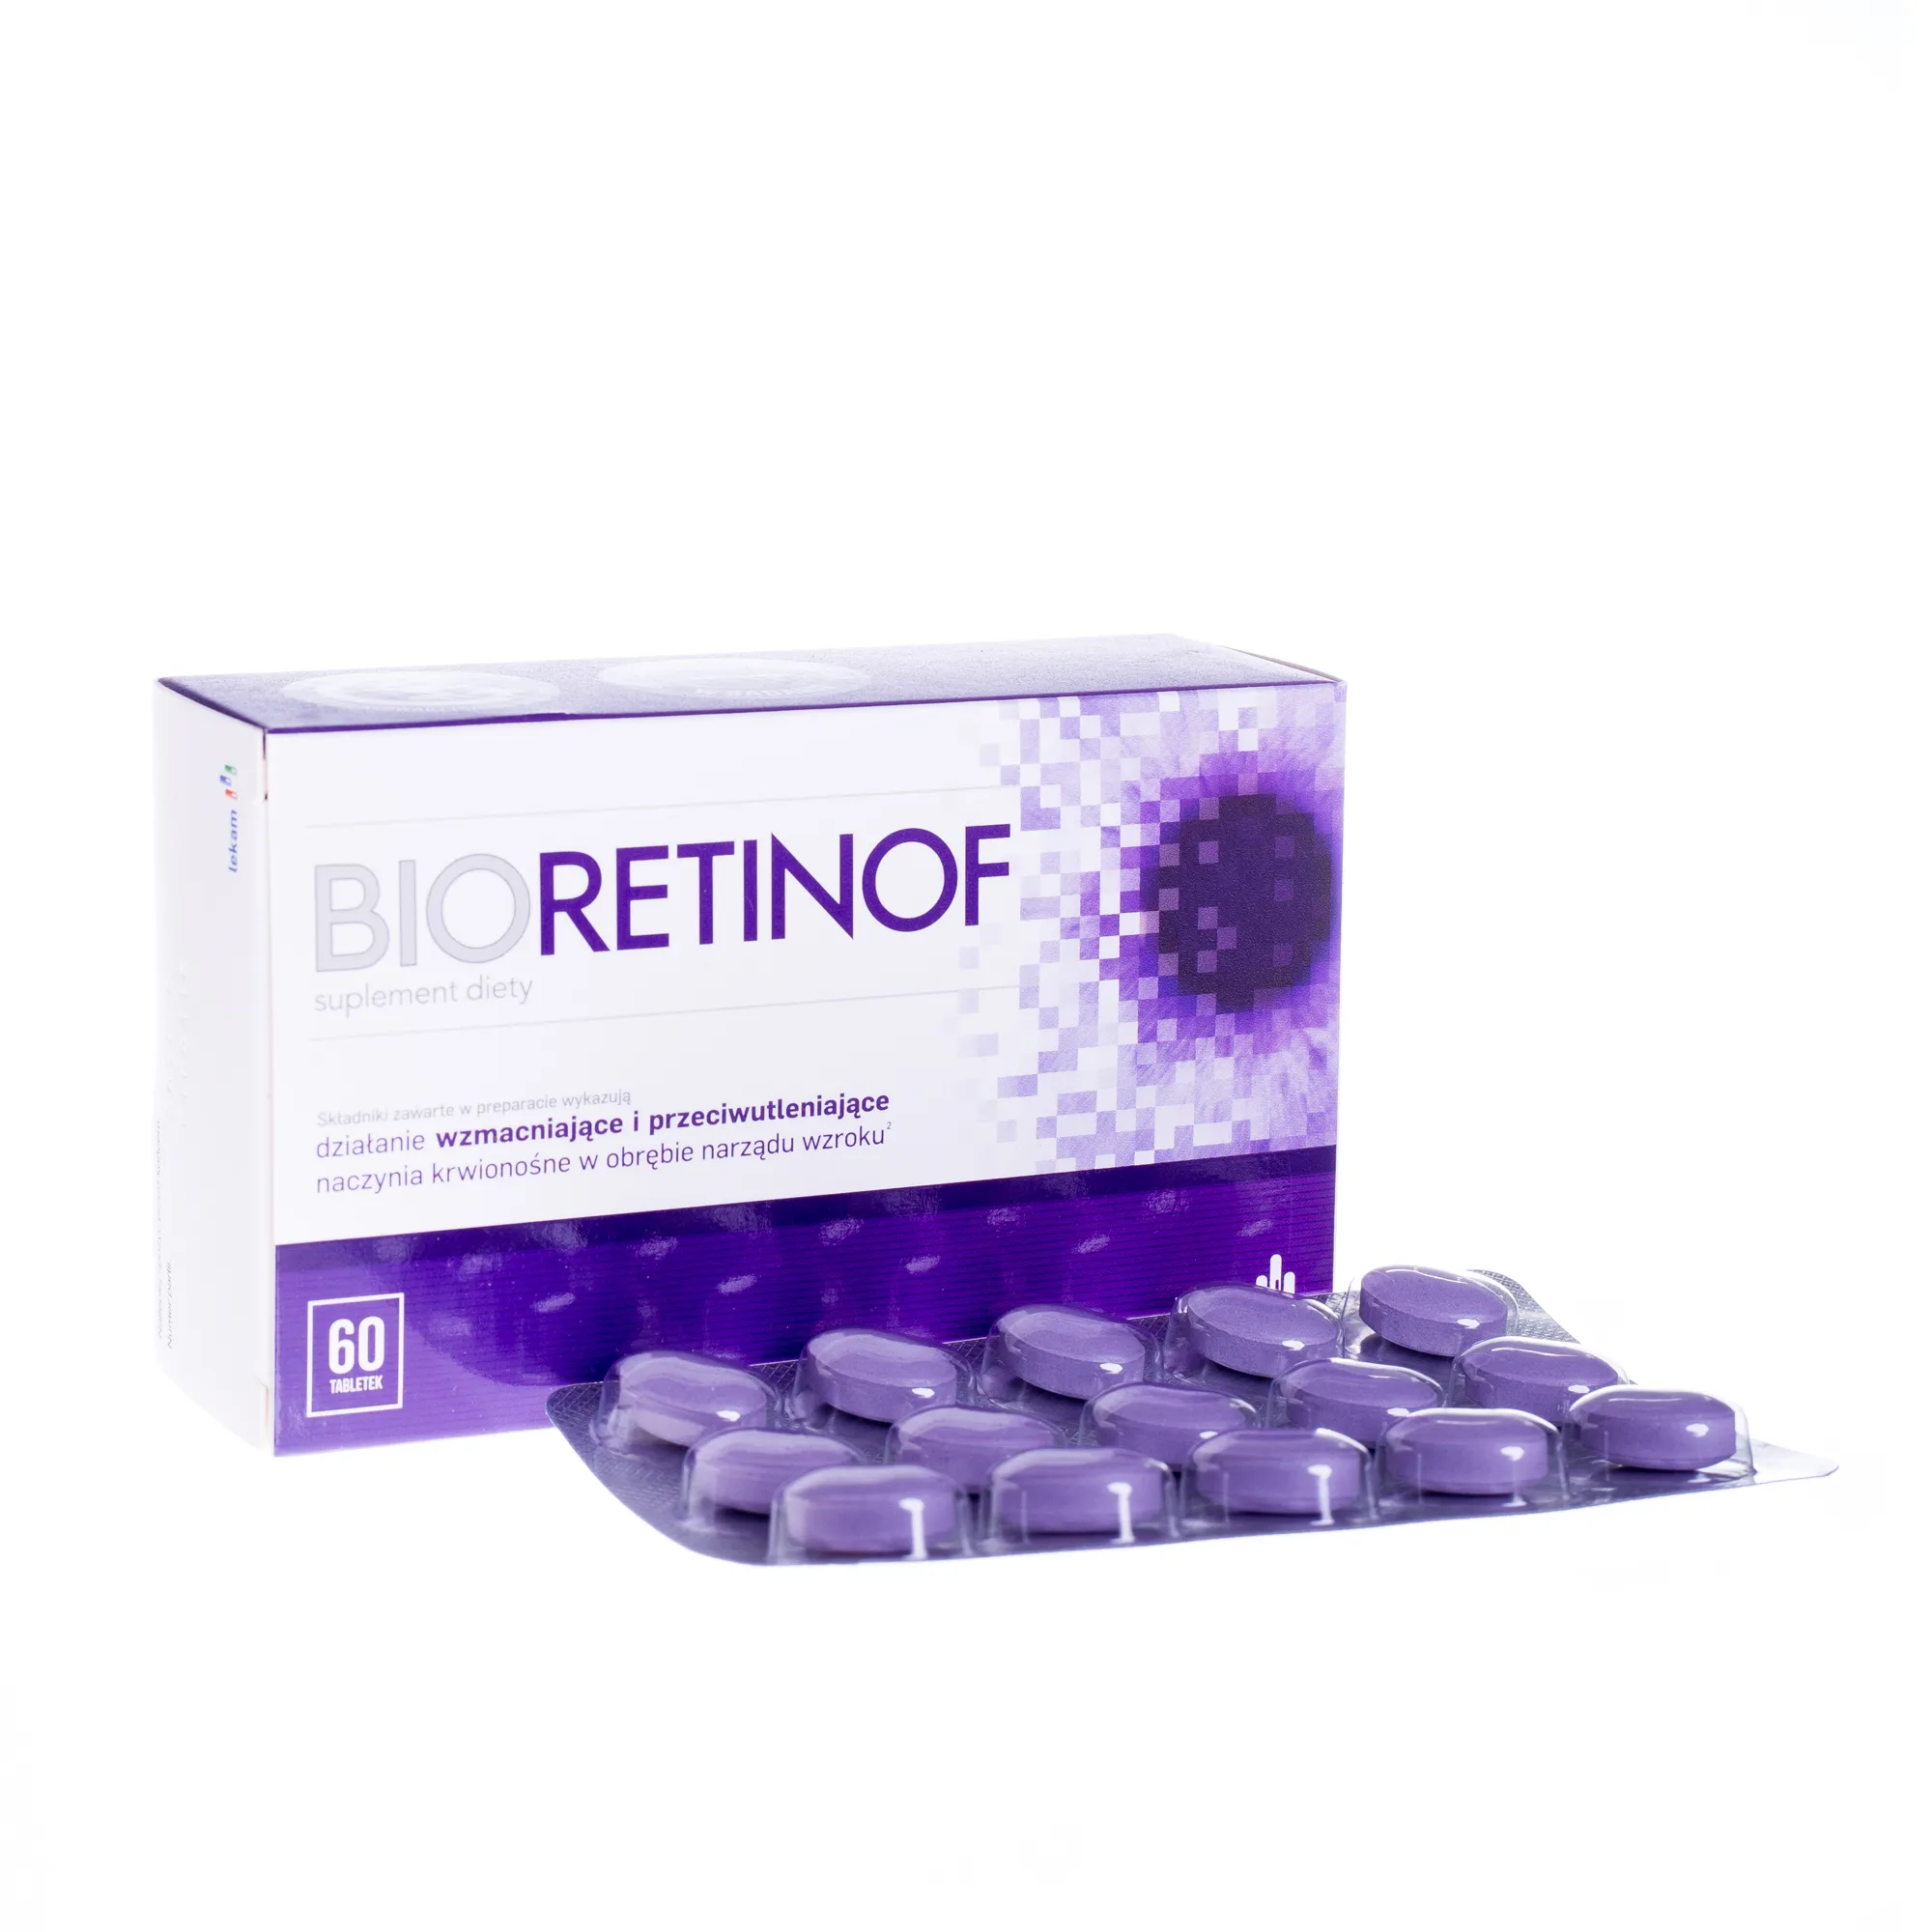 Bioretinof, suplement diety, 60 tabletek